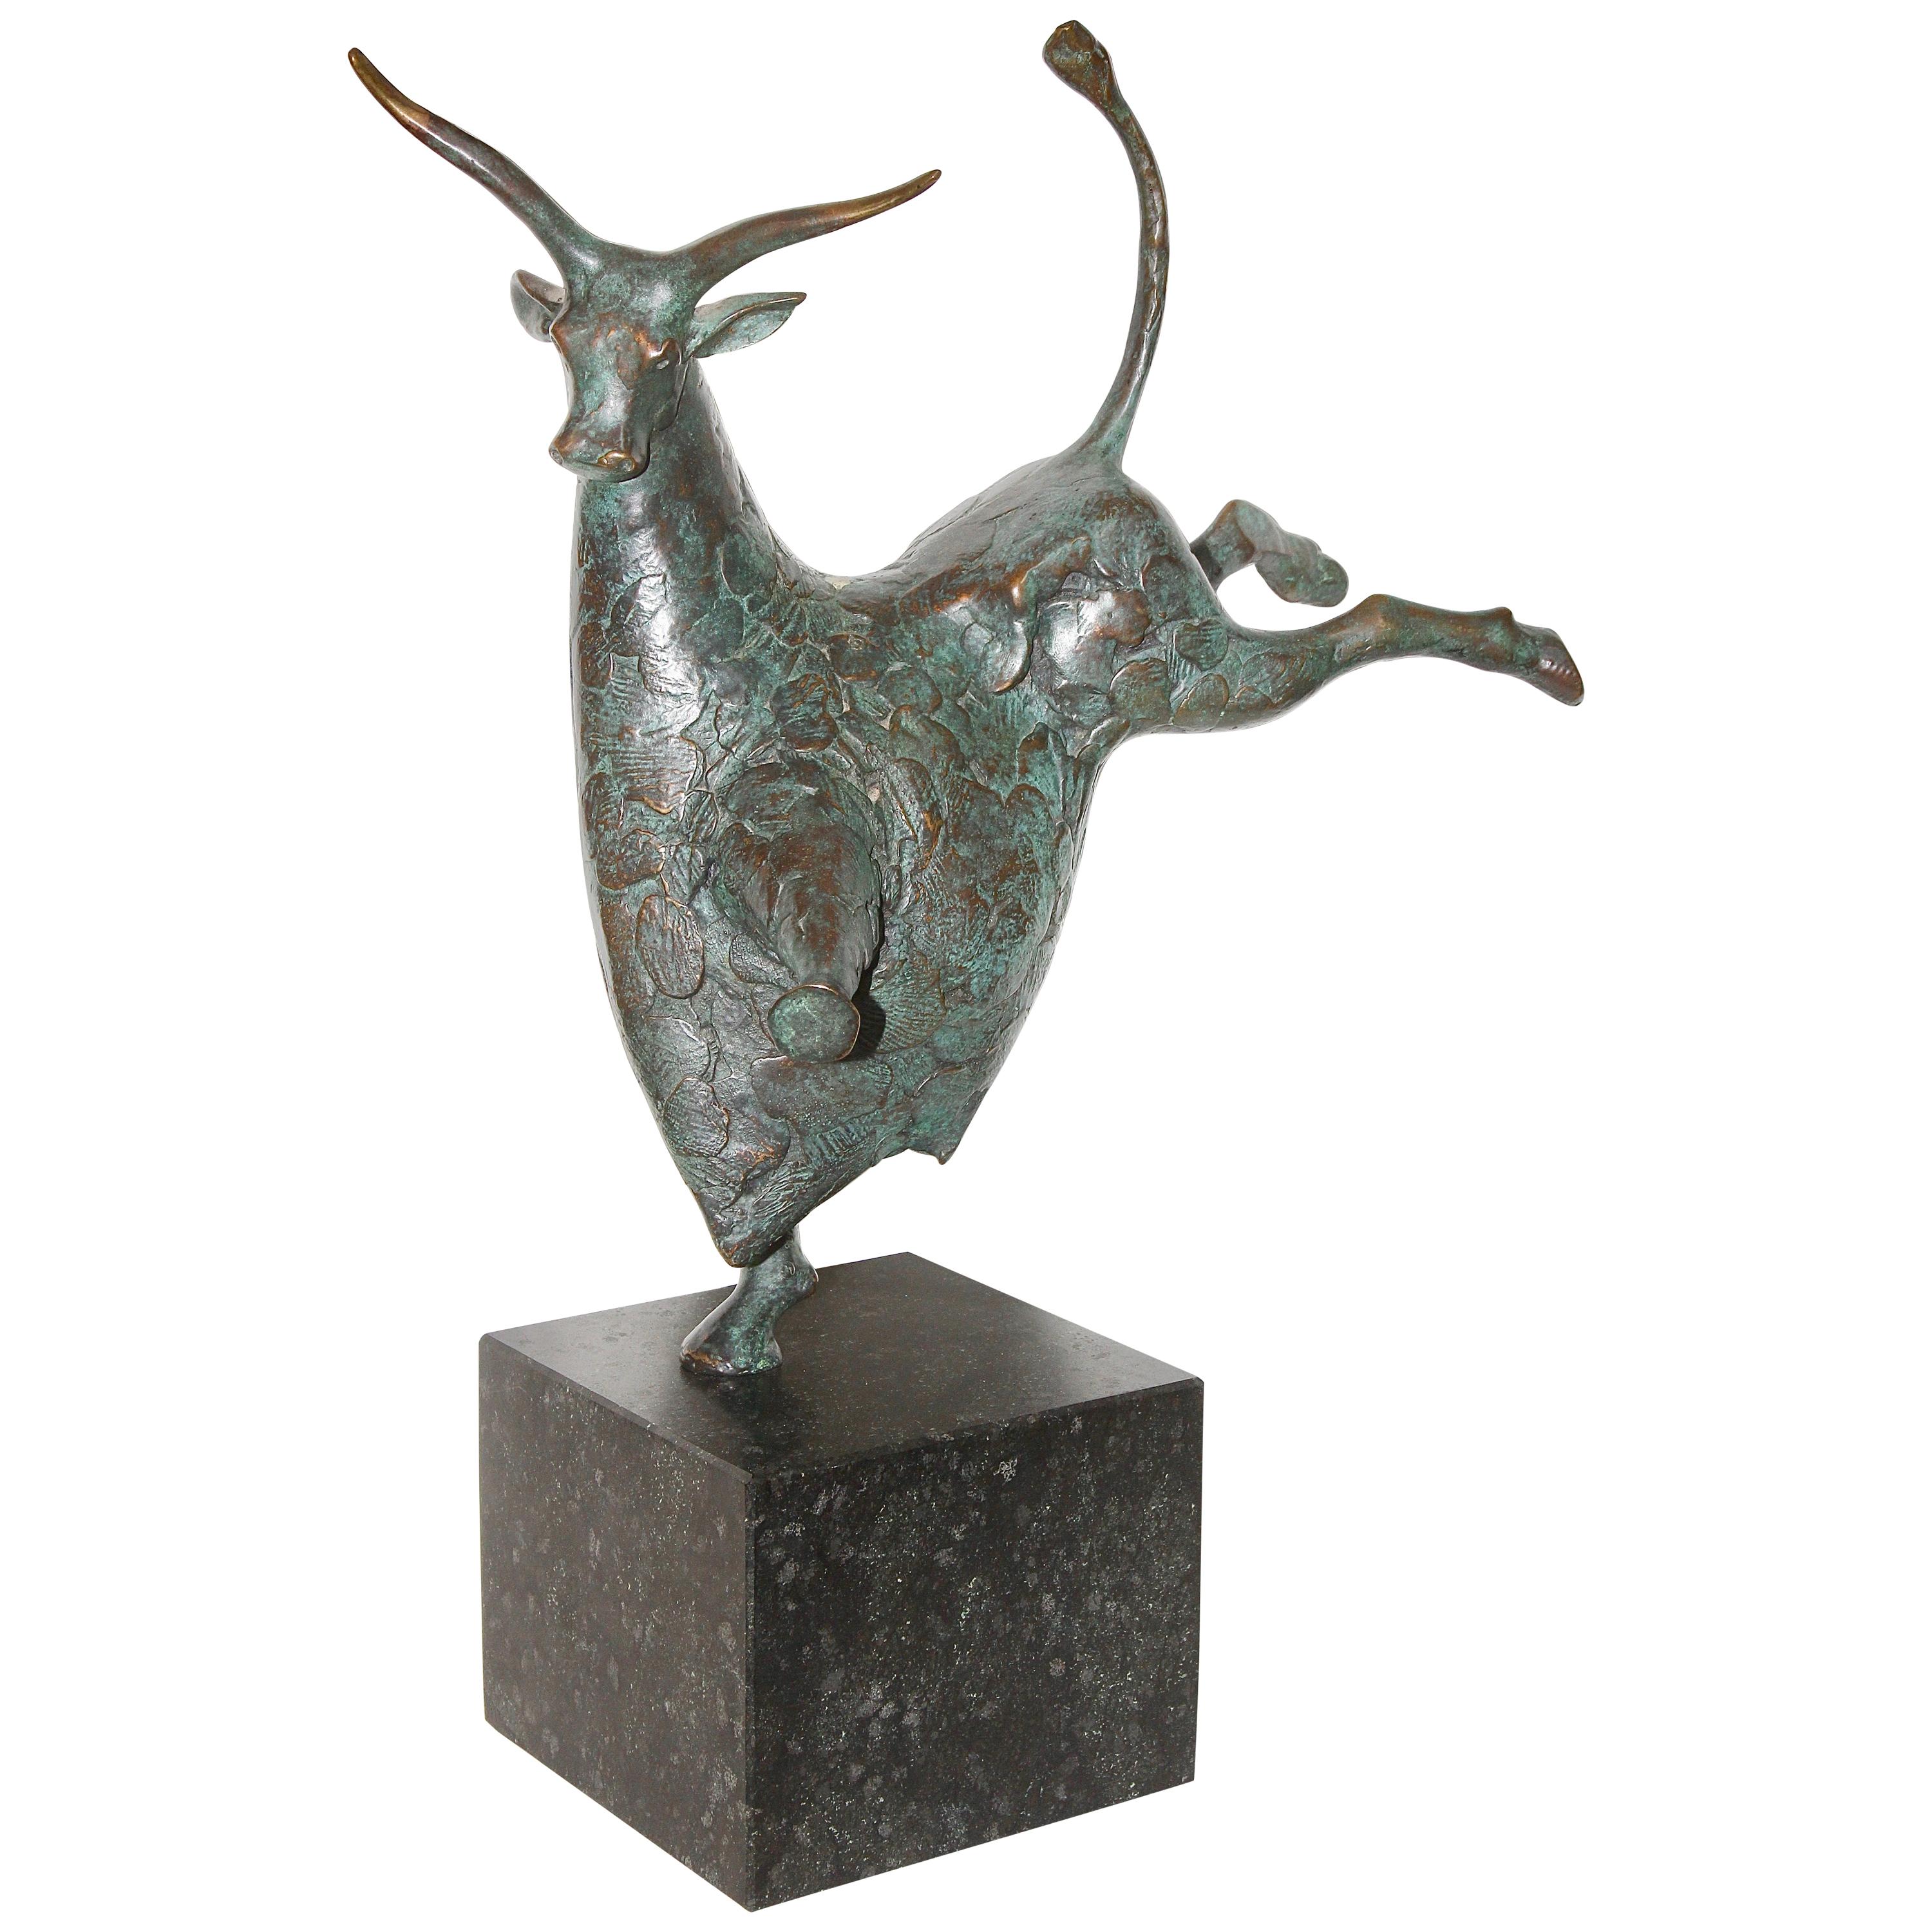 Evert Den Hartog "The Bull" Decorative, Contemporary Sculpture, Bronze on Marble